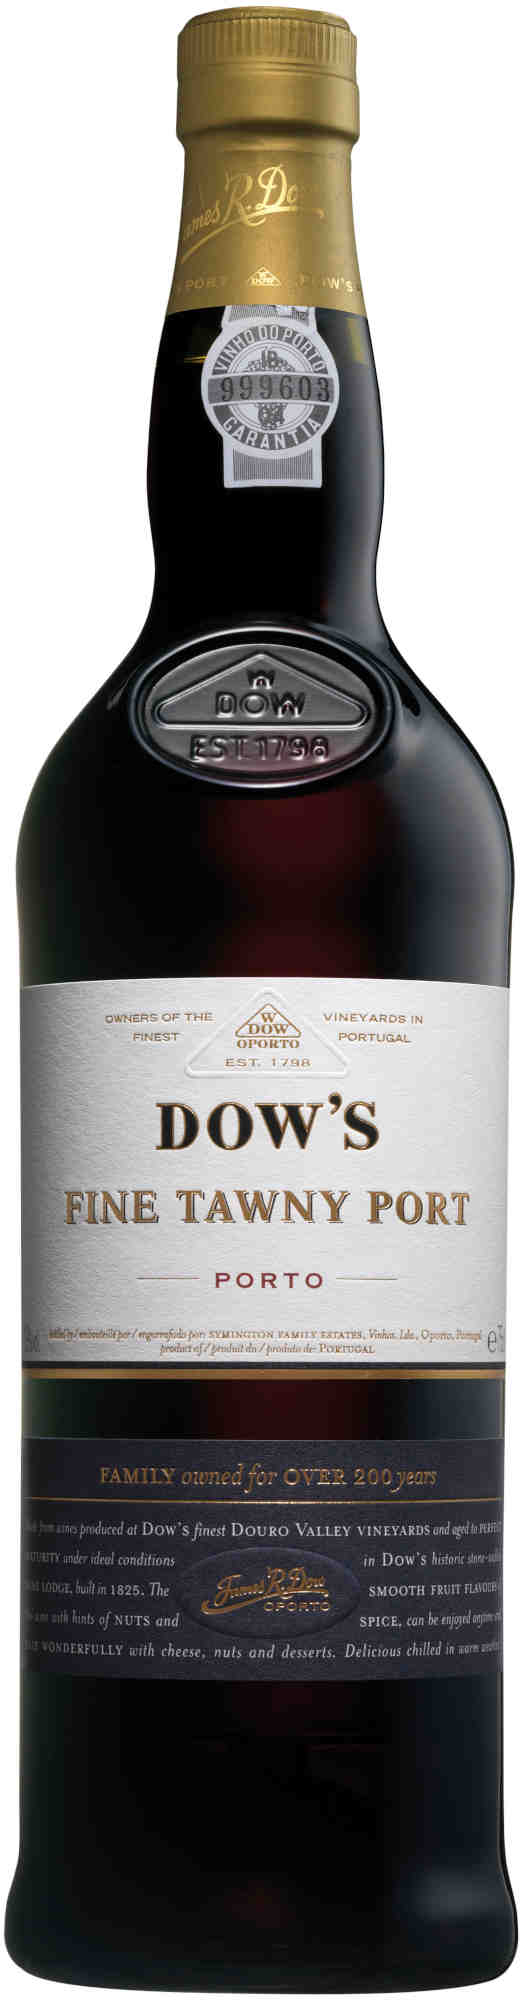 Dows-Fine-Tawny-Port